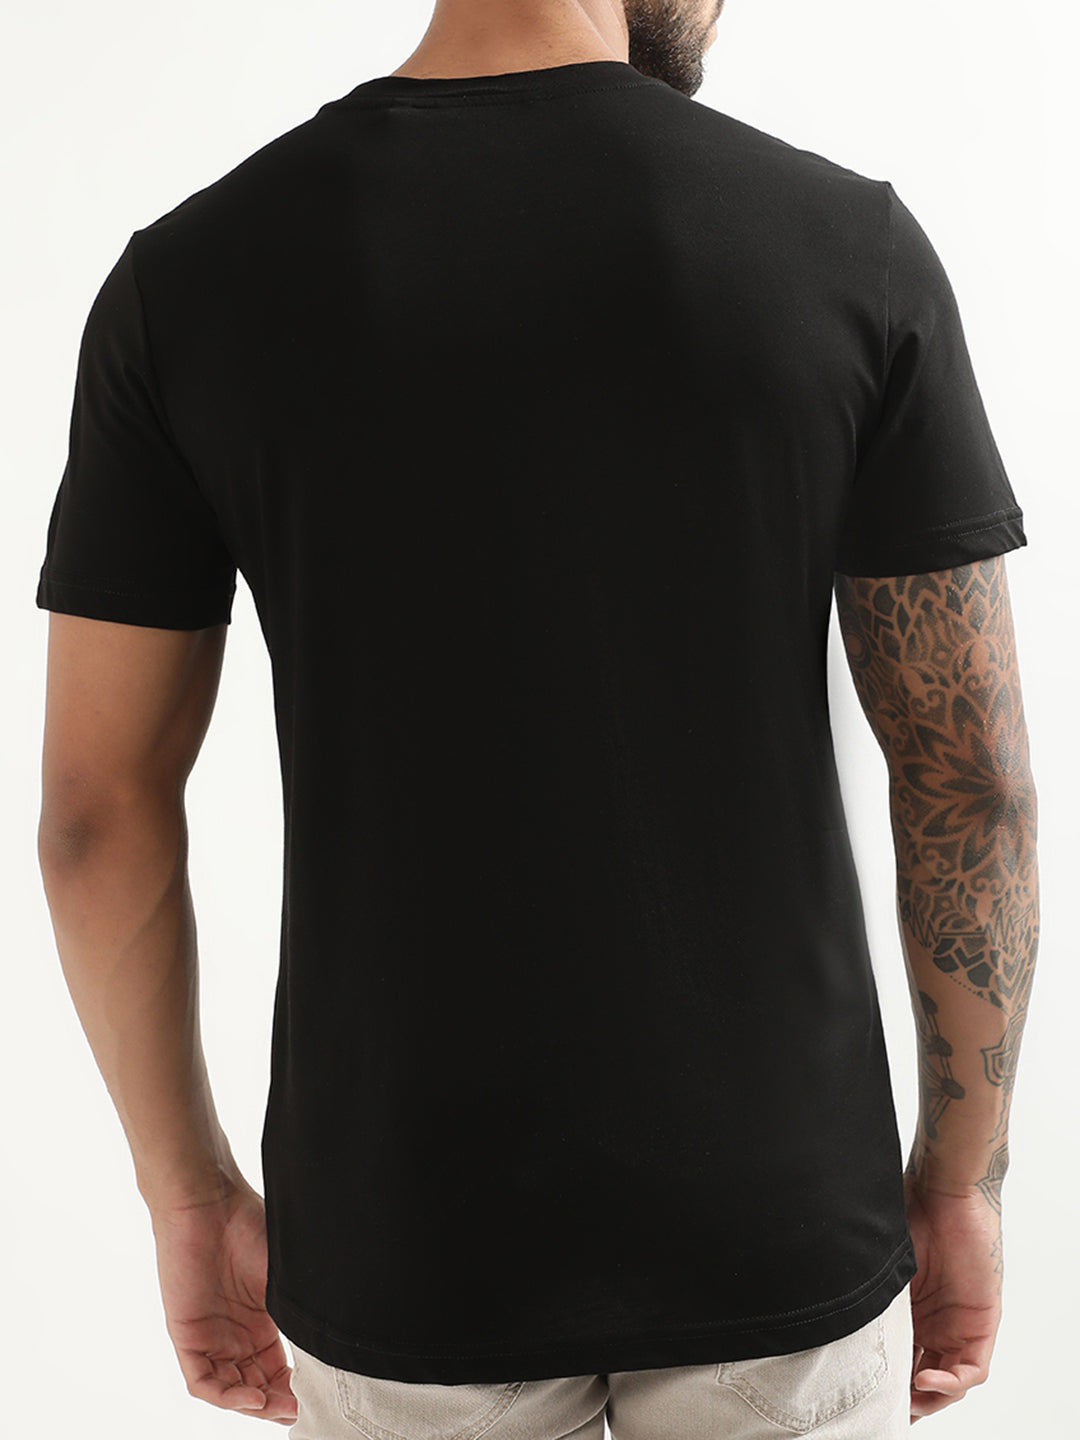 Antony Morato Black Logo Slim Fit T-Shirt